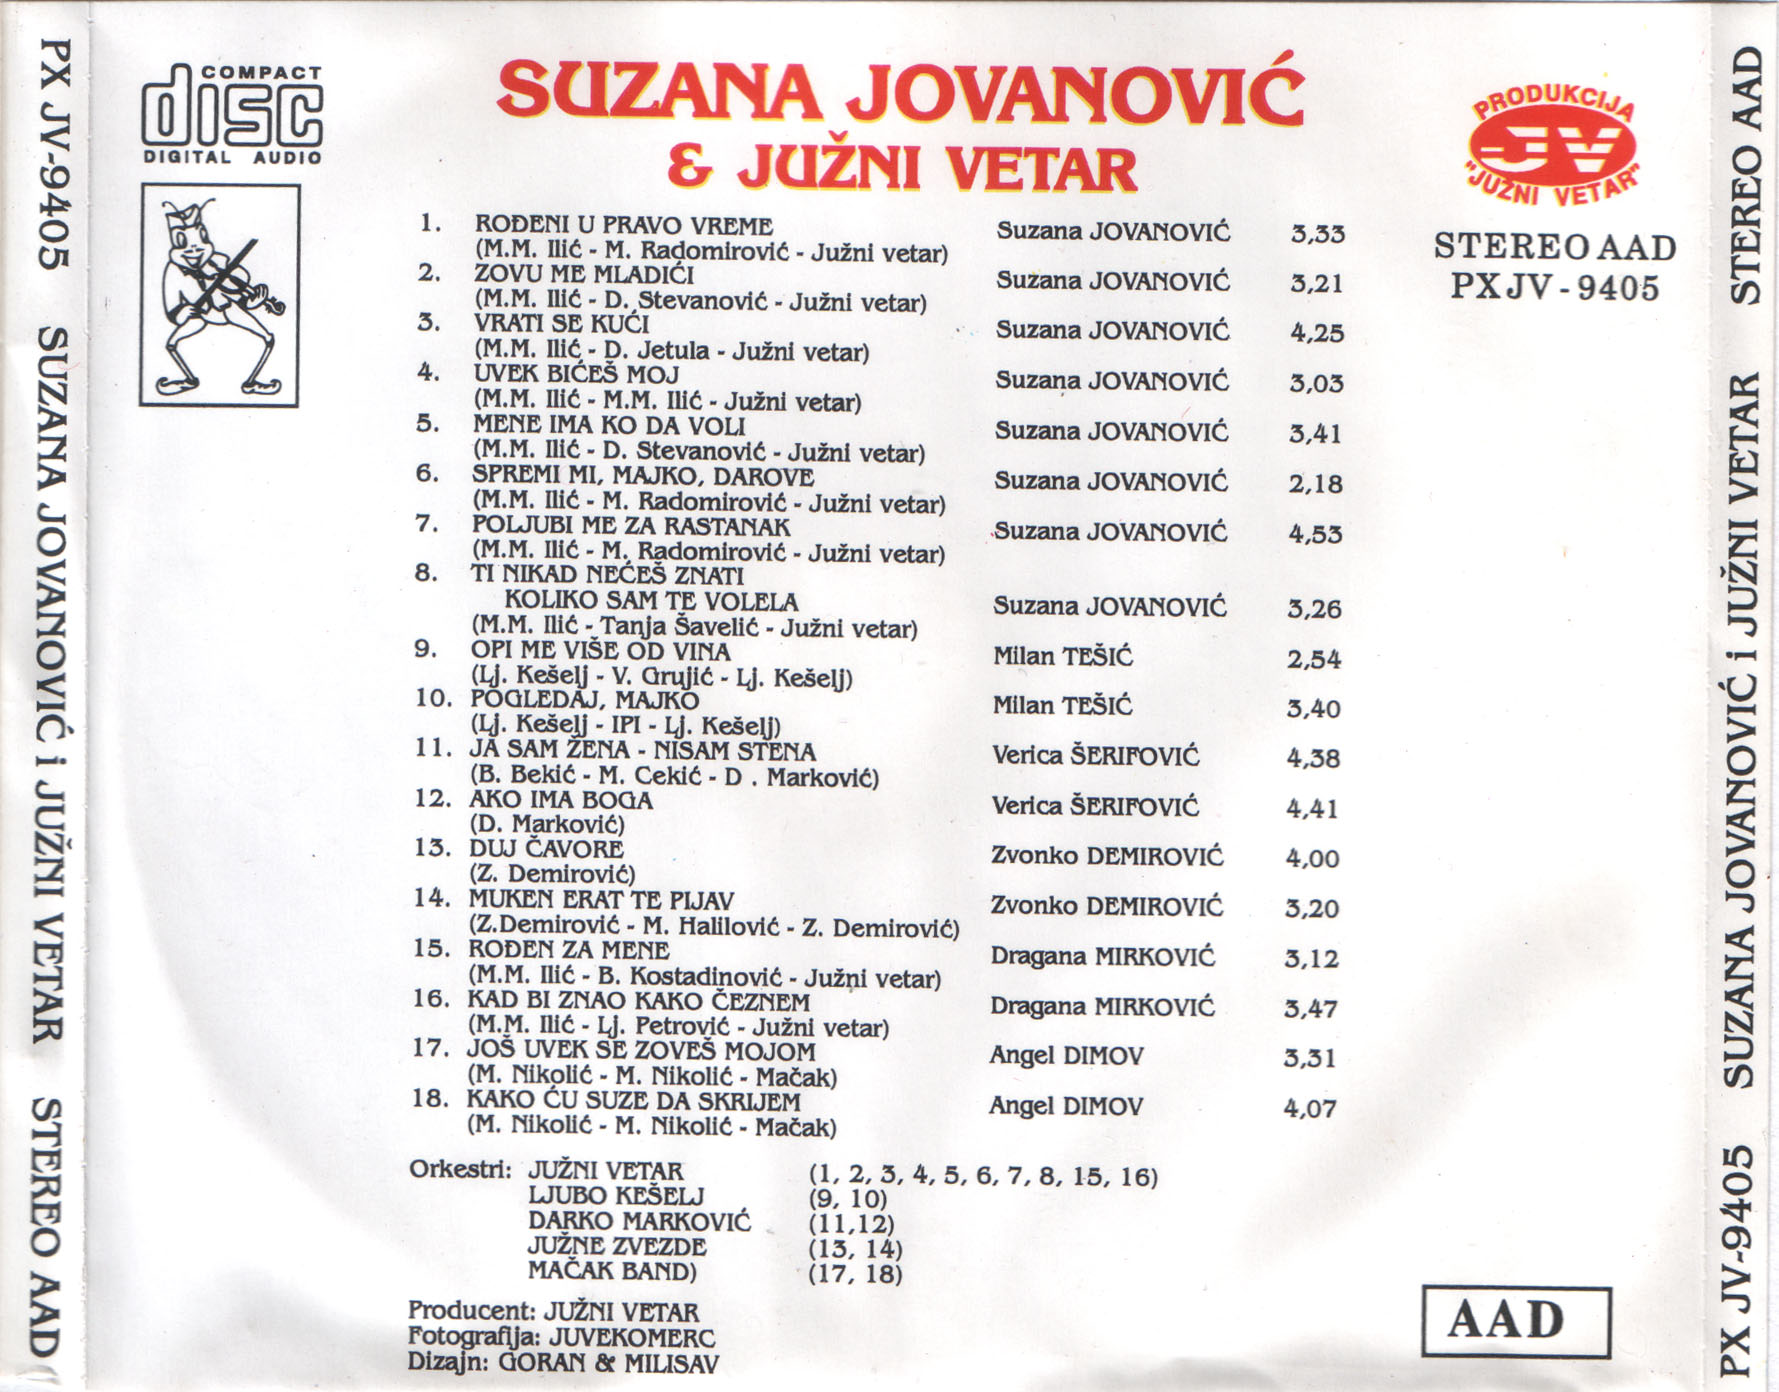 Suzana Jovanovic 1994 Zadnja